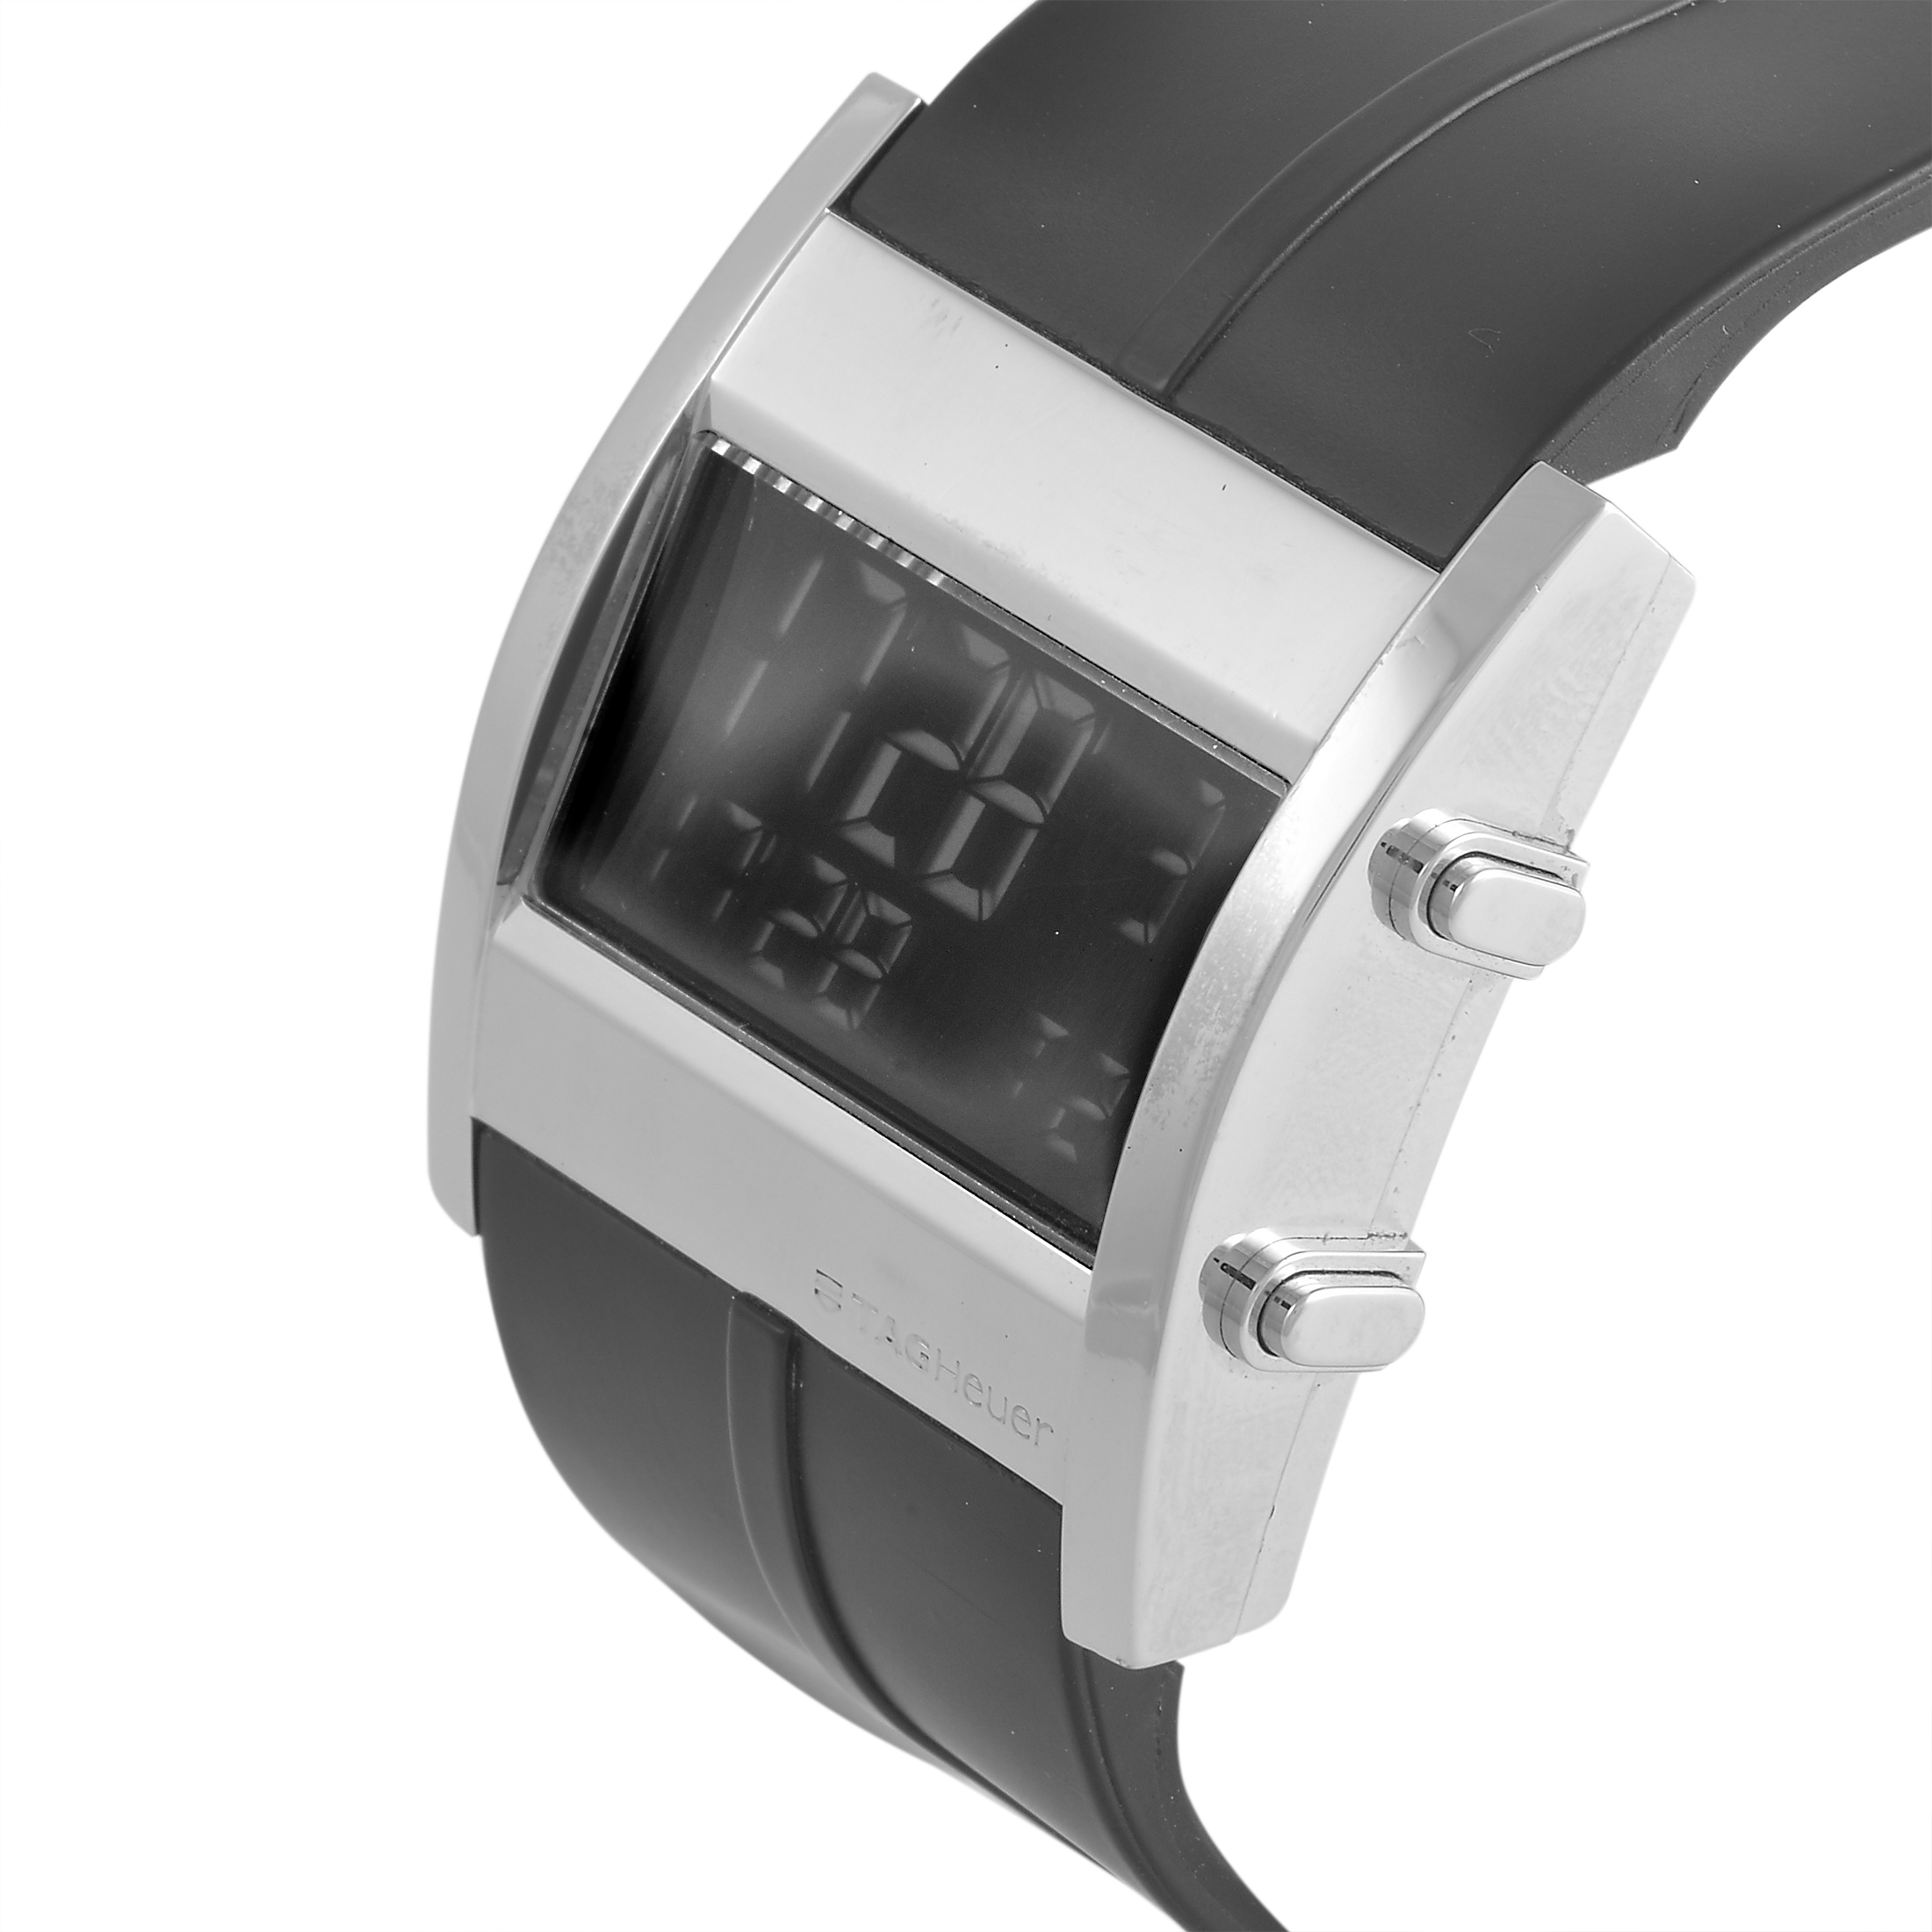 TAG Heuer Microtimer Digital Watch CS111C.FT6003